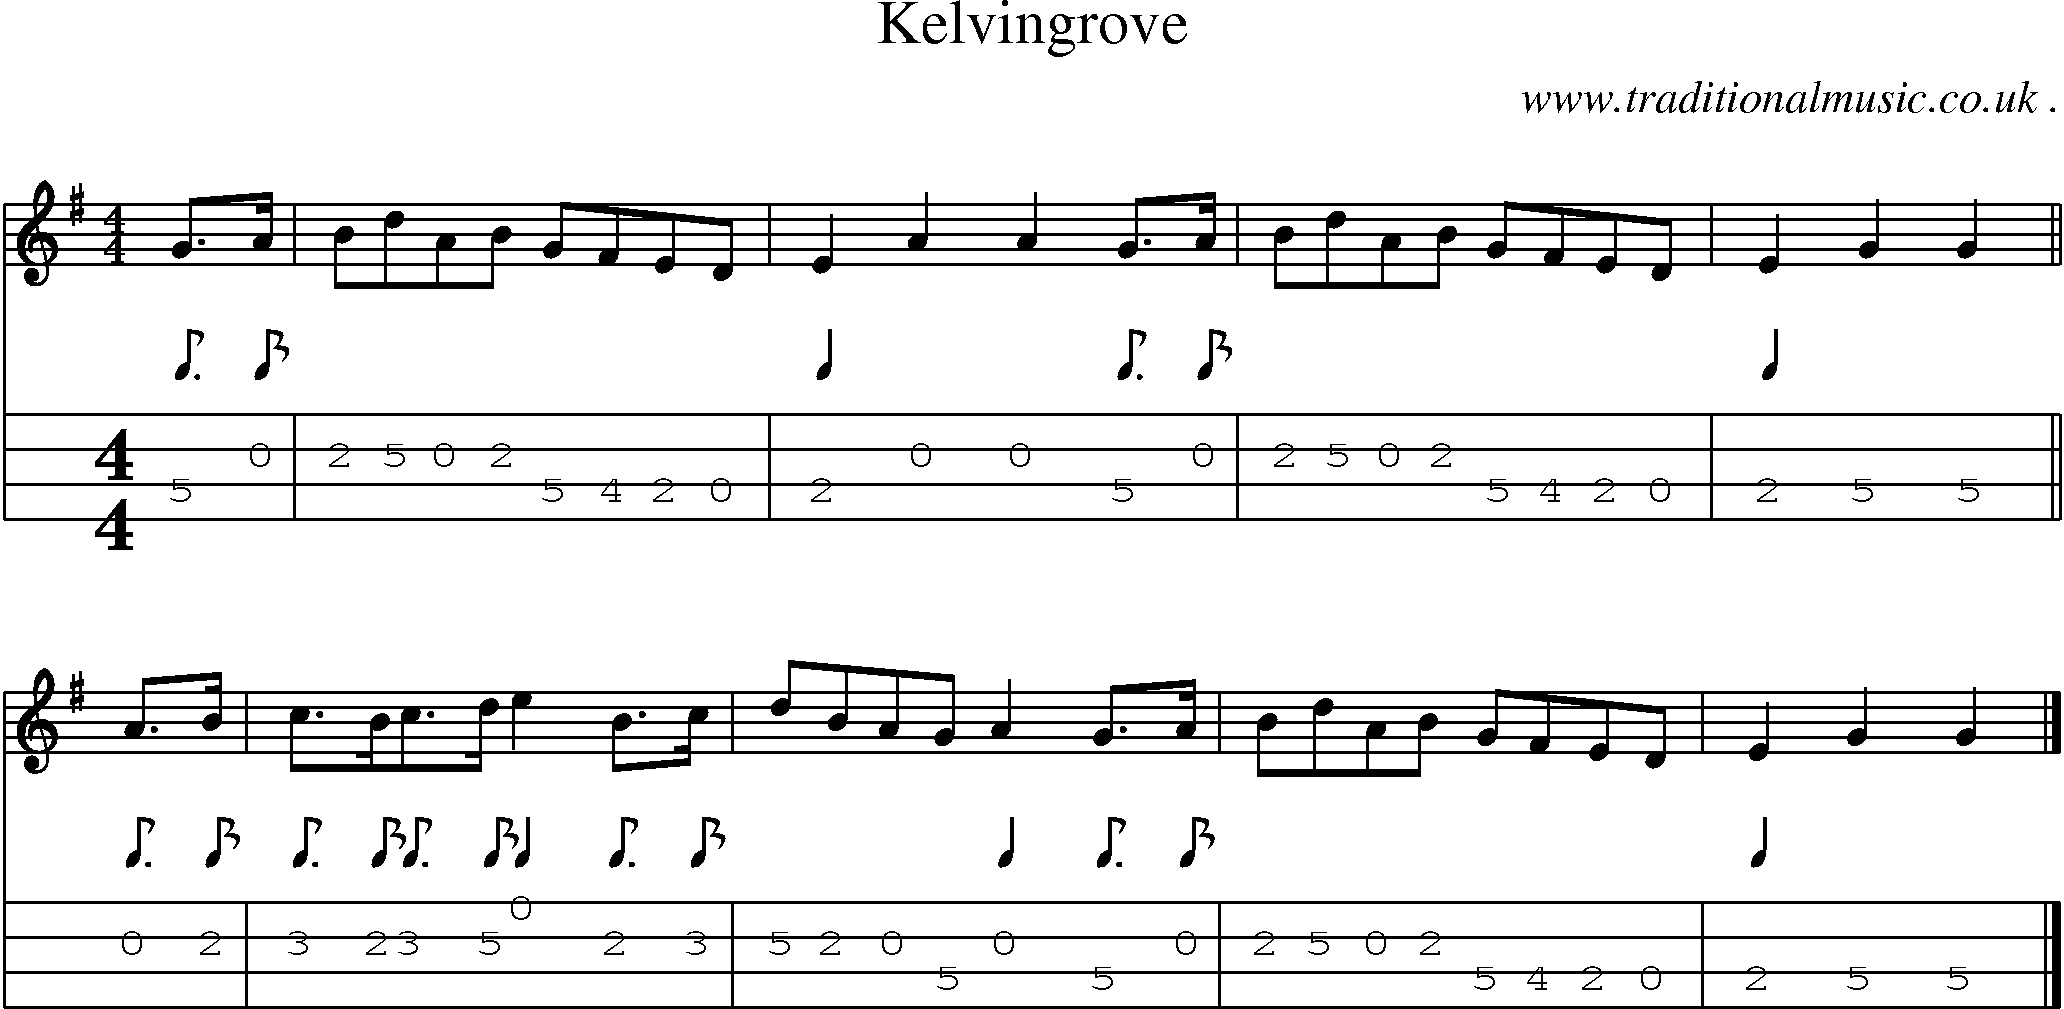 Sheet-music  score, Chords and Mandolin Tabs for Kelvingrove